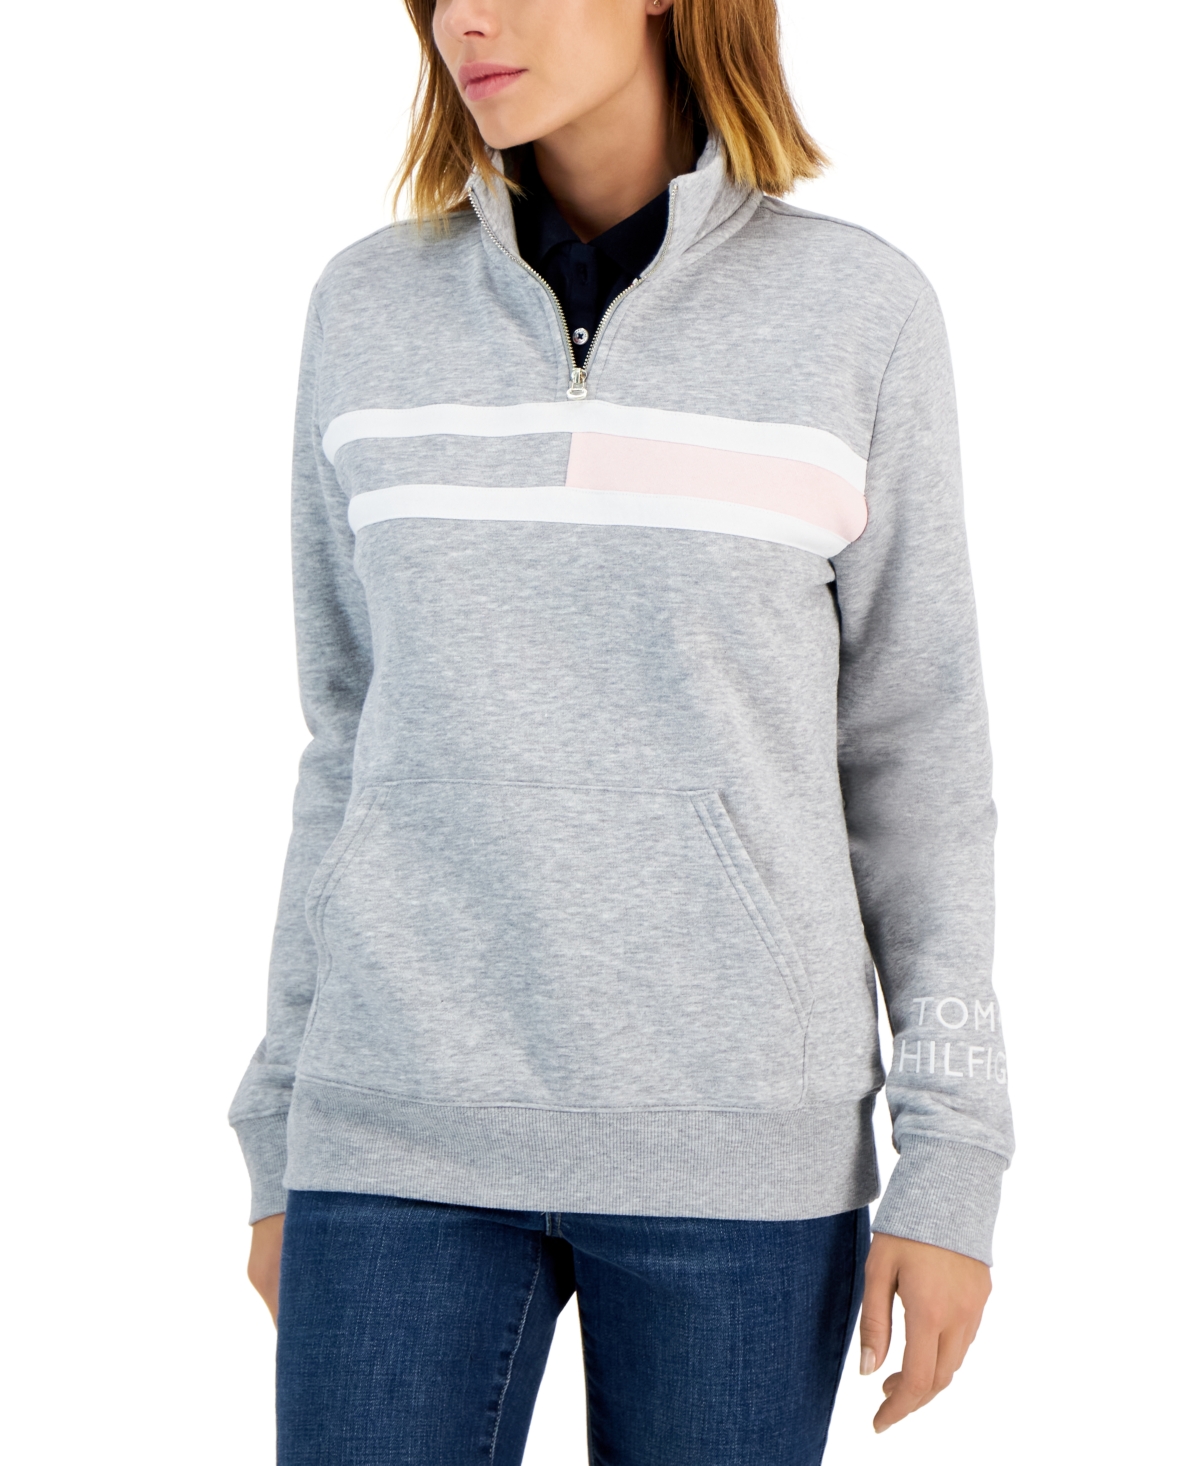  Tommy Hilfiger Women's Zip Neck Pullover Sweatshirt